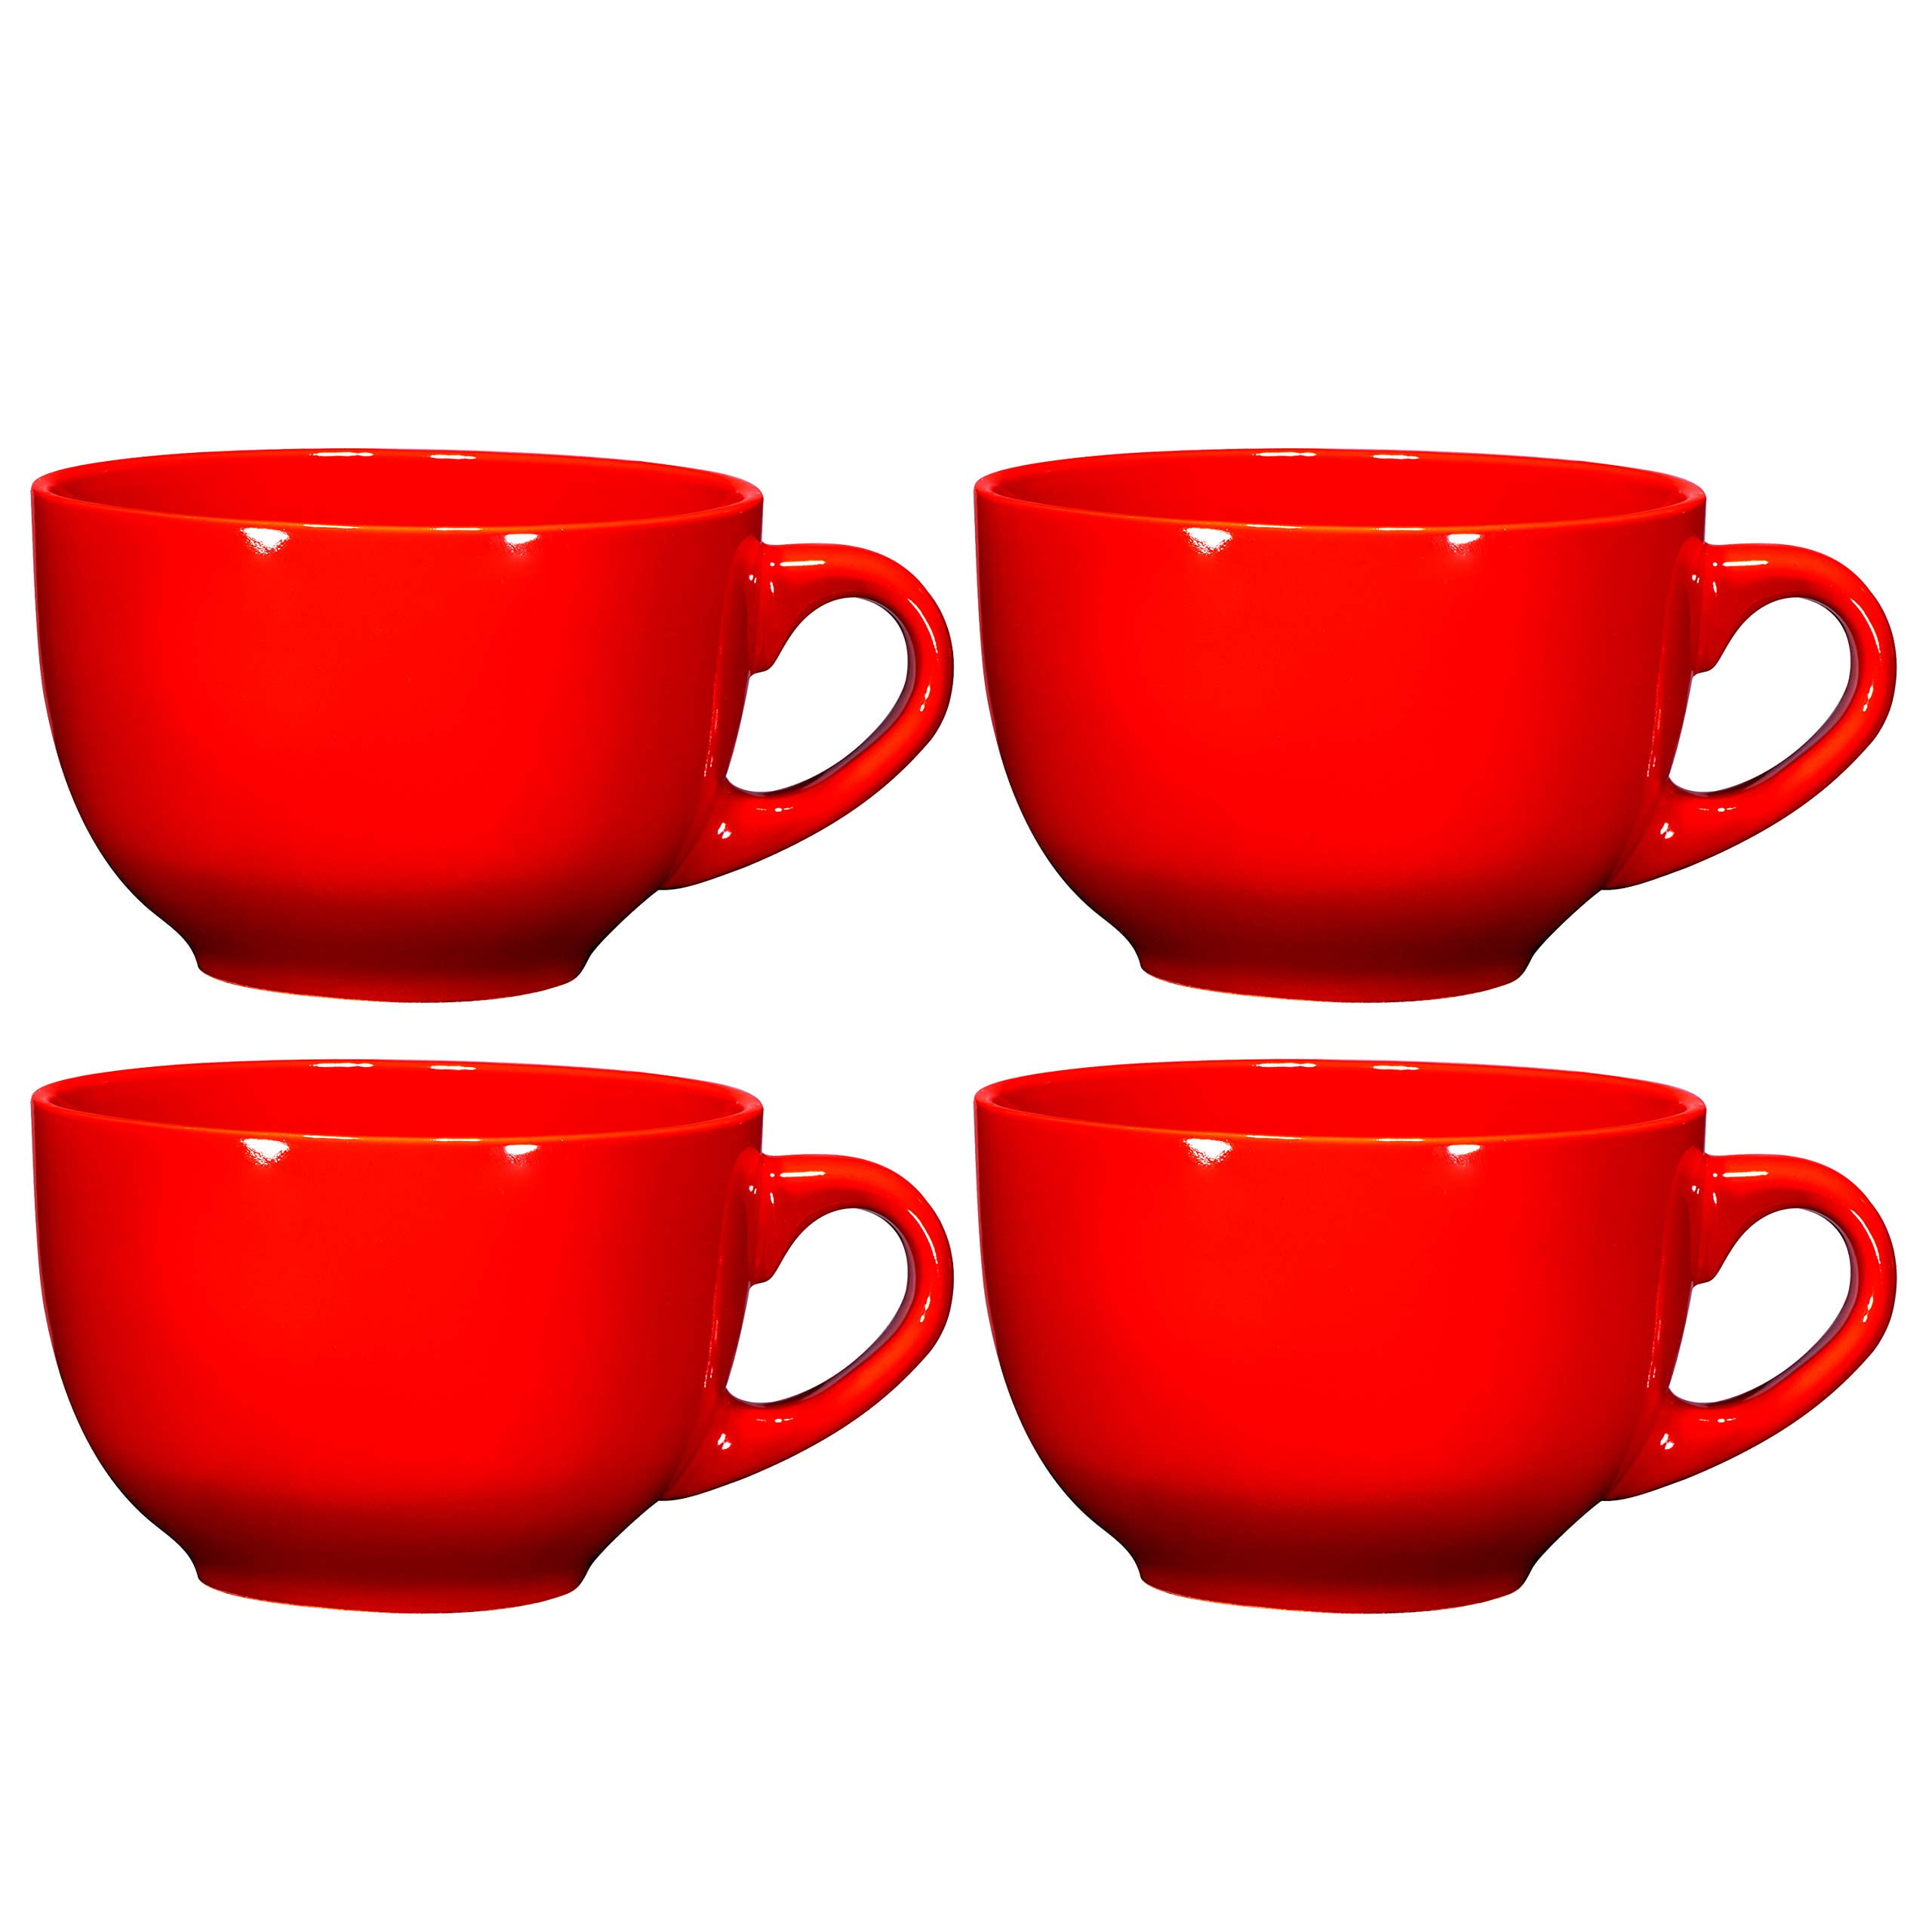 Red Co. Original Footed Clear Glass Irish Coffee Mug, Set of 6